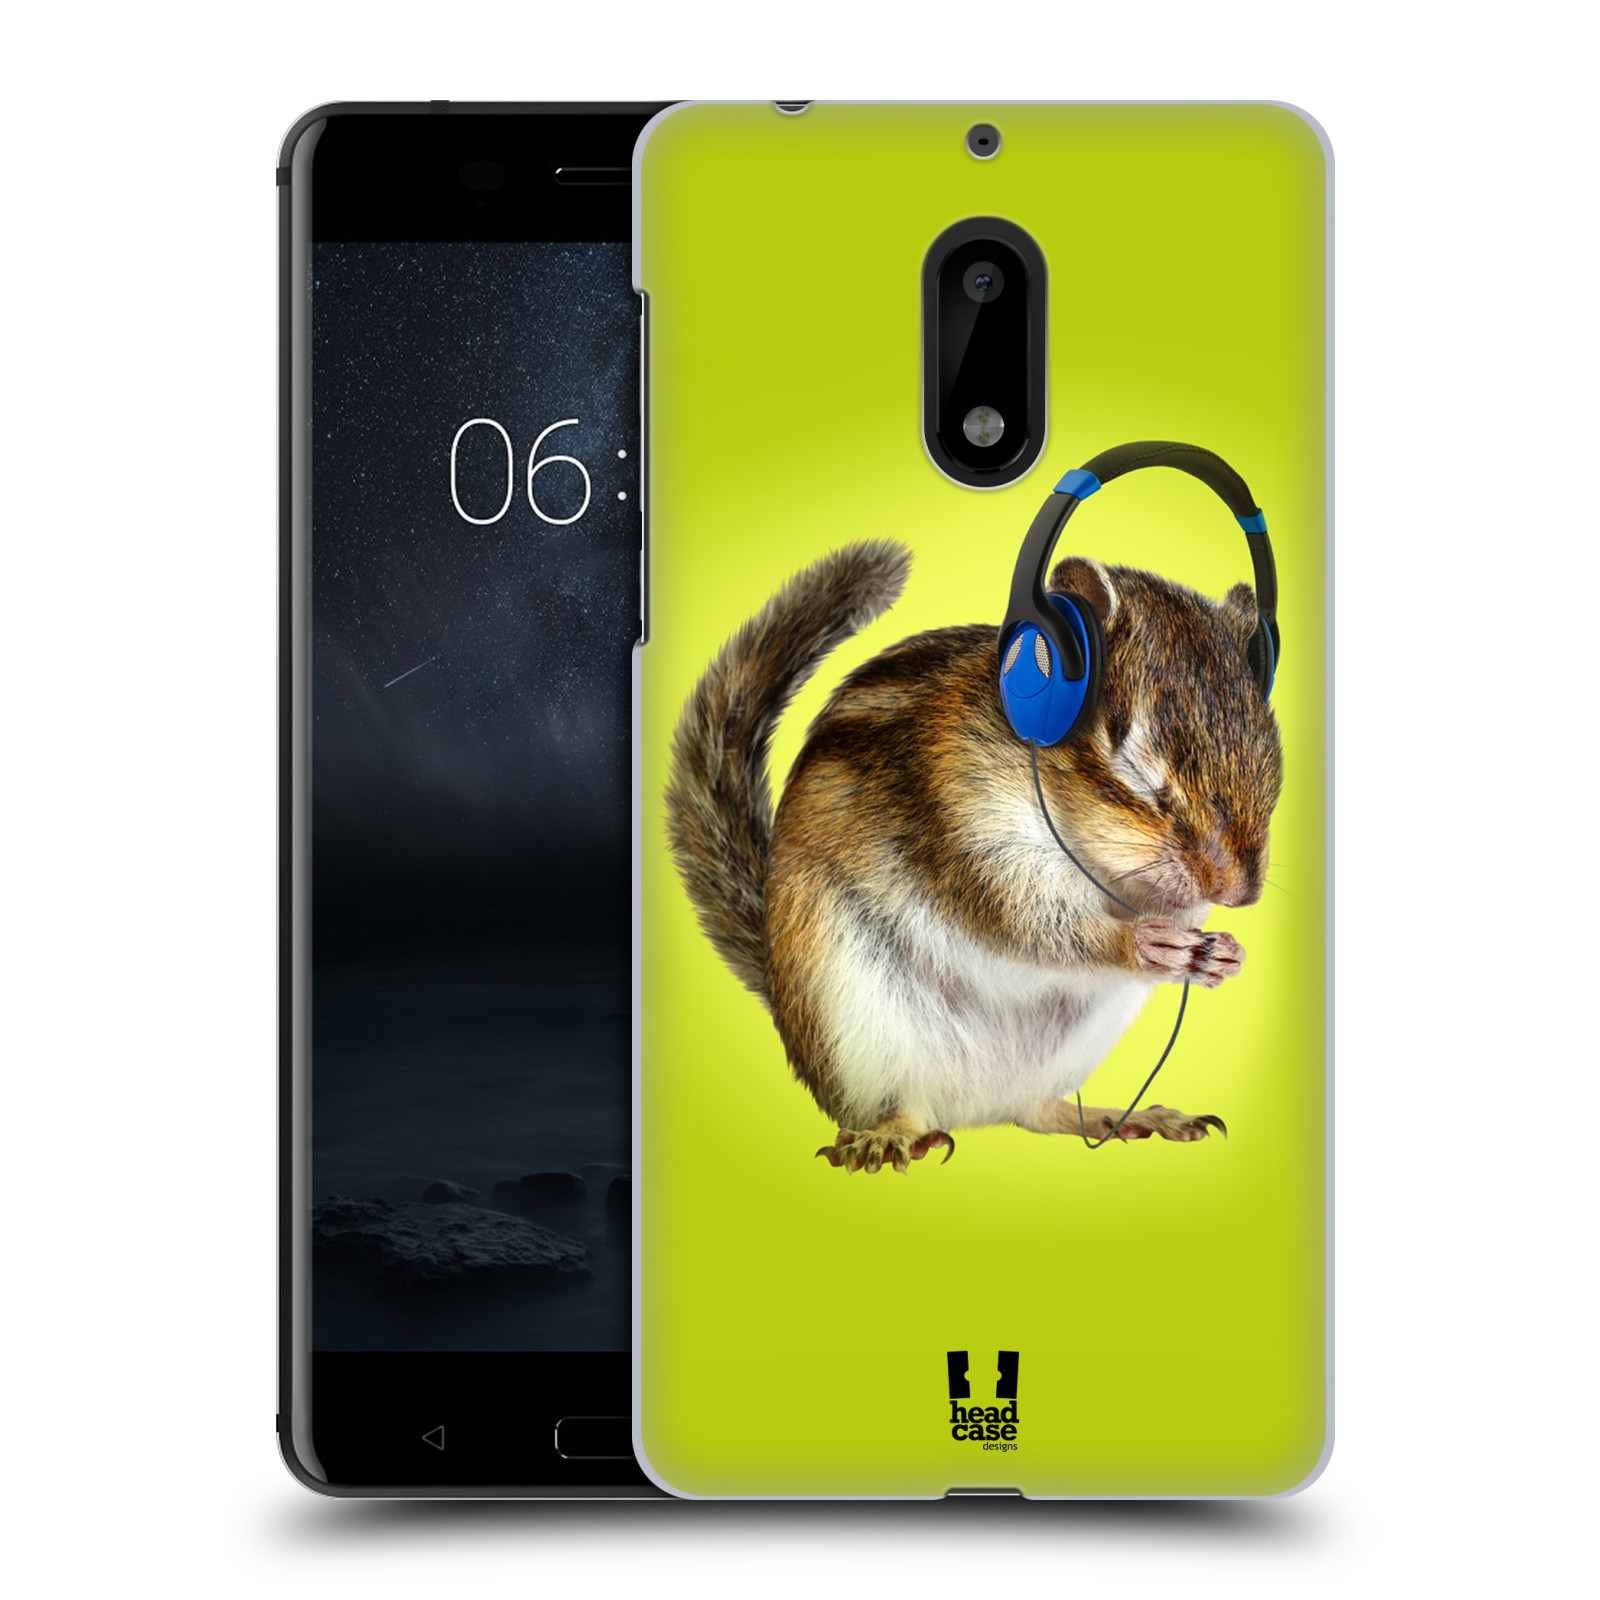 HEAD CASE plastový obal na mobil Nokia 6 vzor Legrační zvířátka veverka se sluchátky